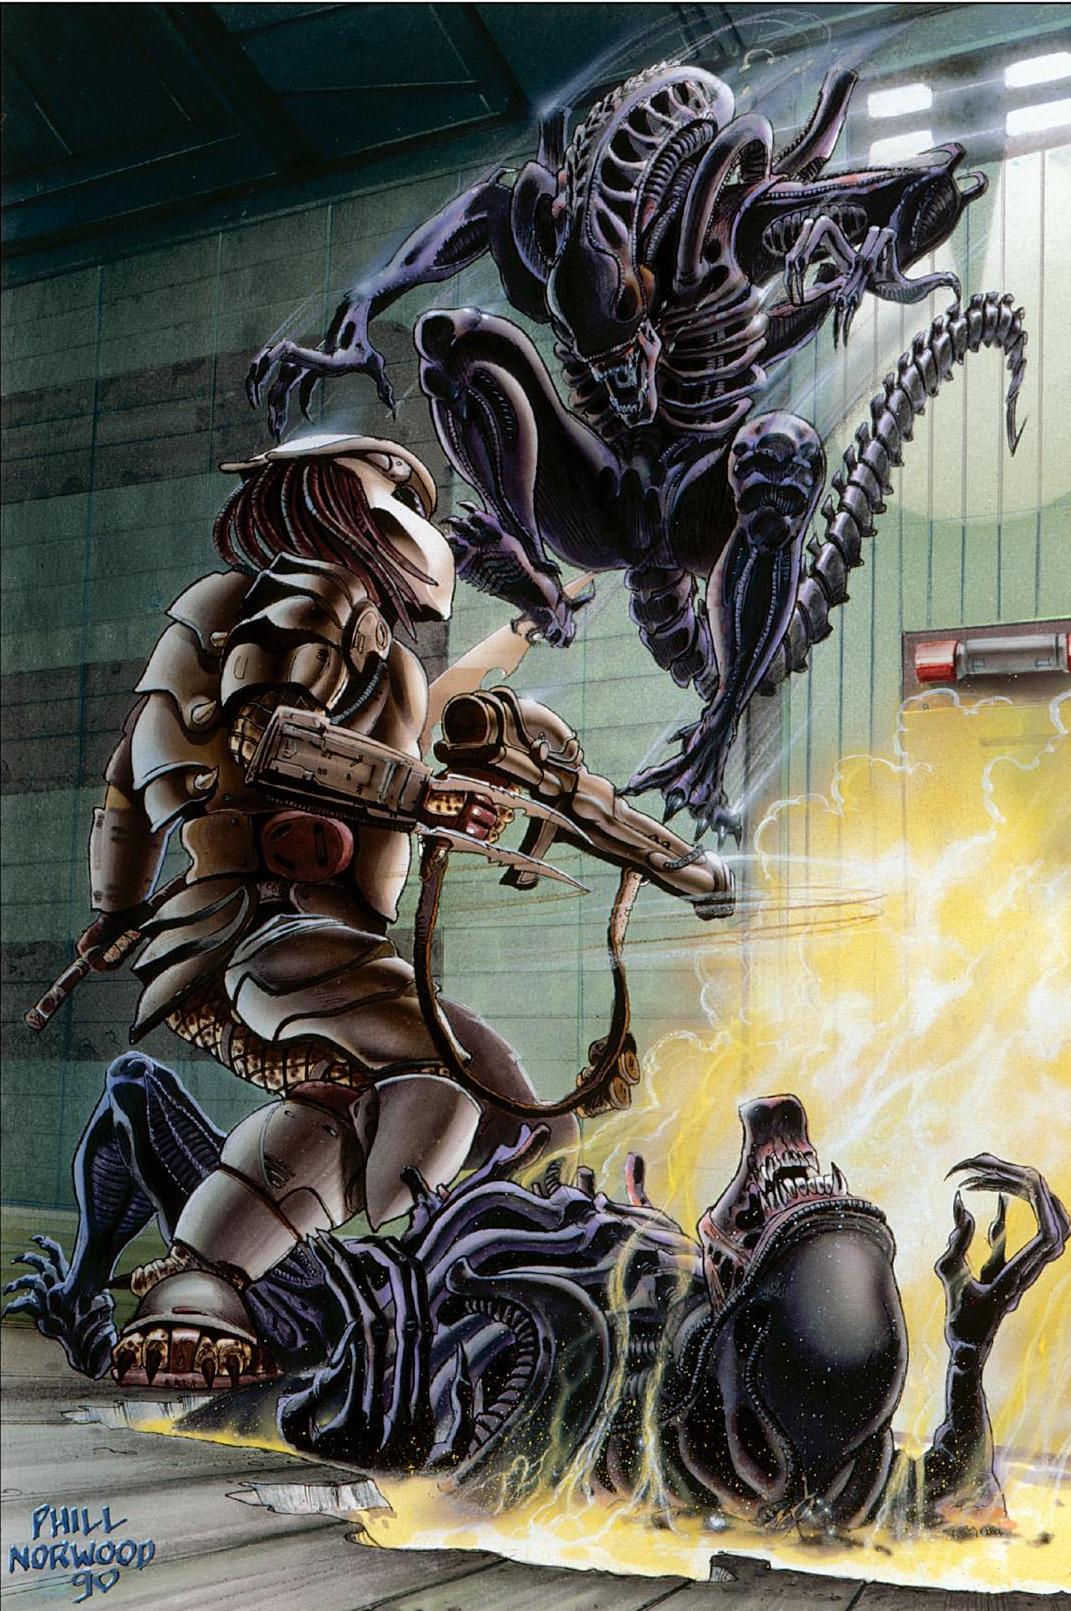 Aliens vs Predator: Annihilation finally revealed by director